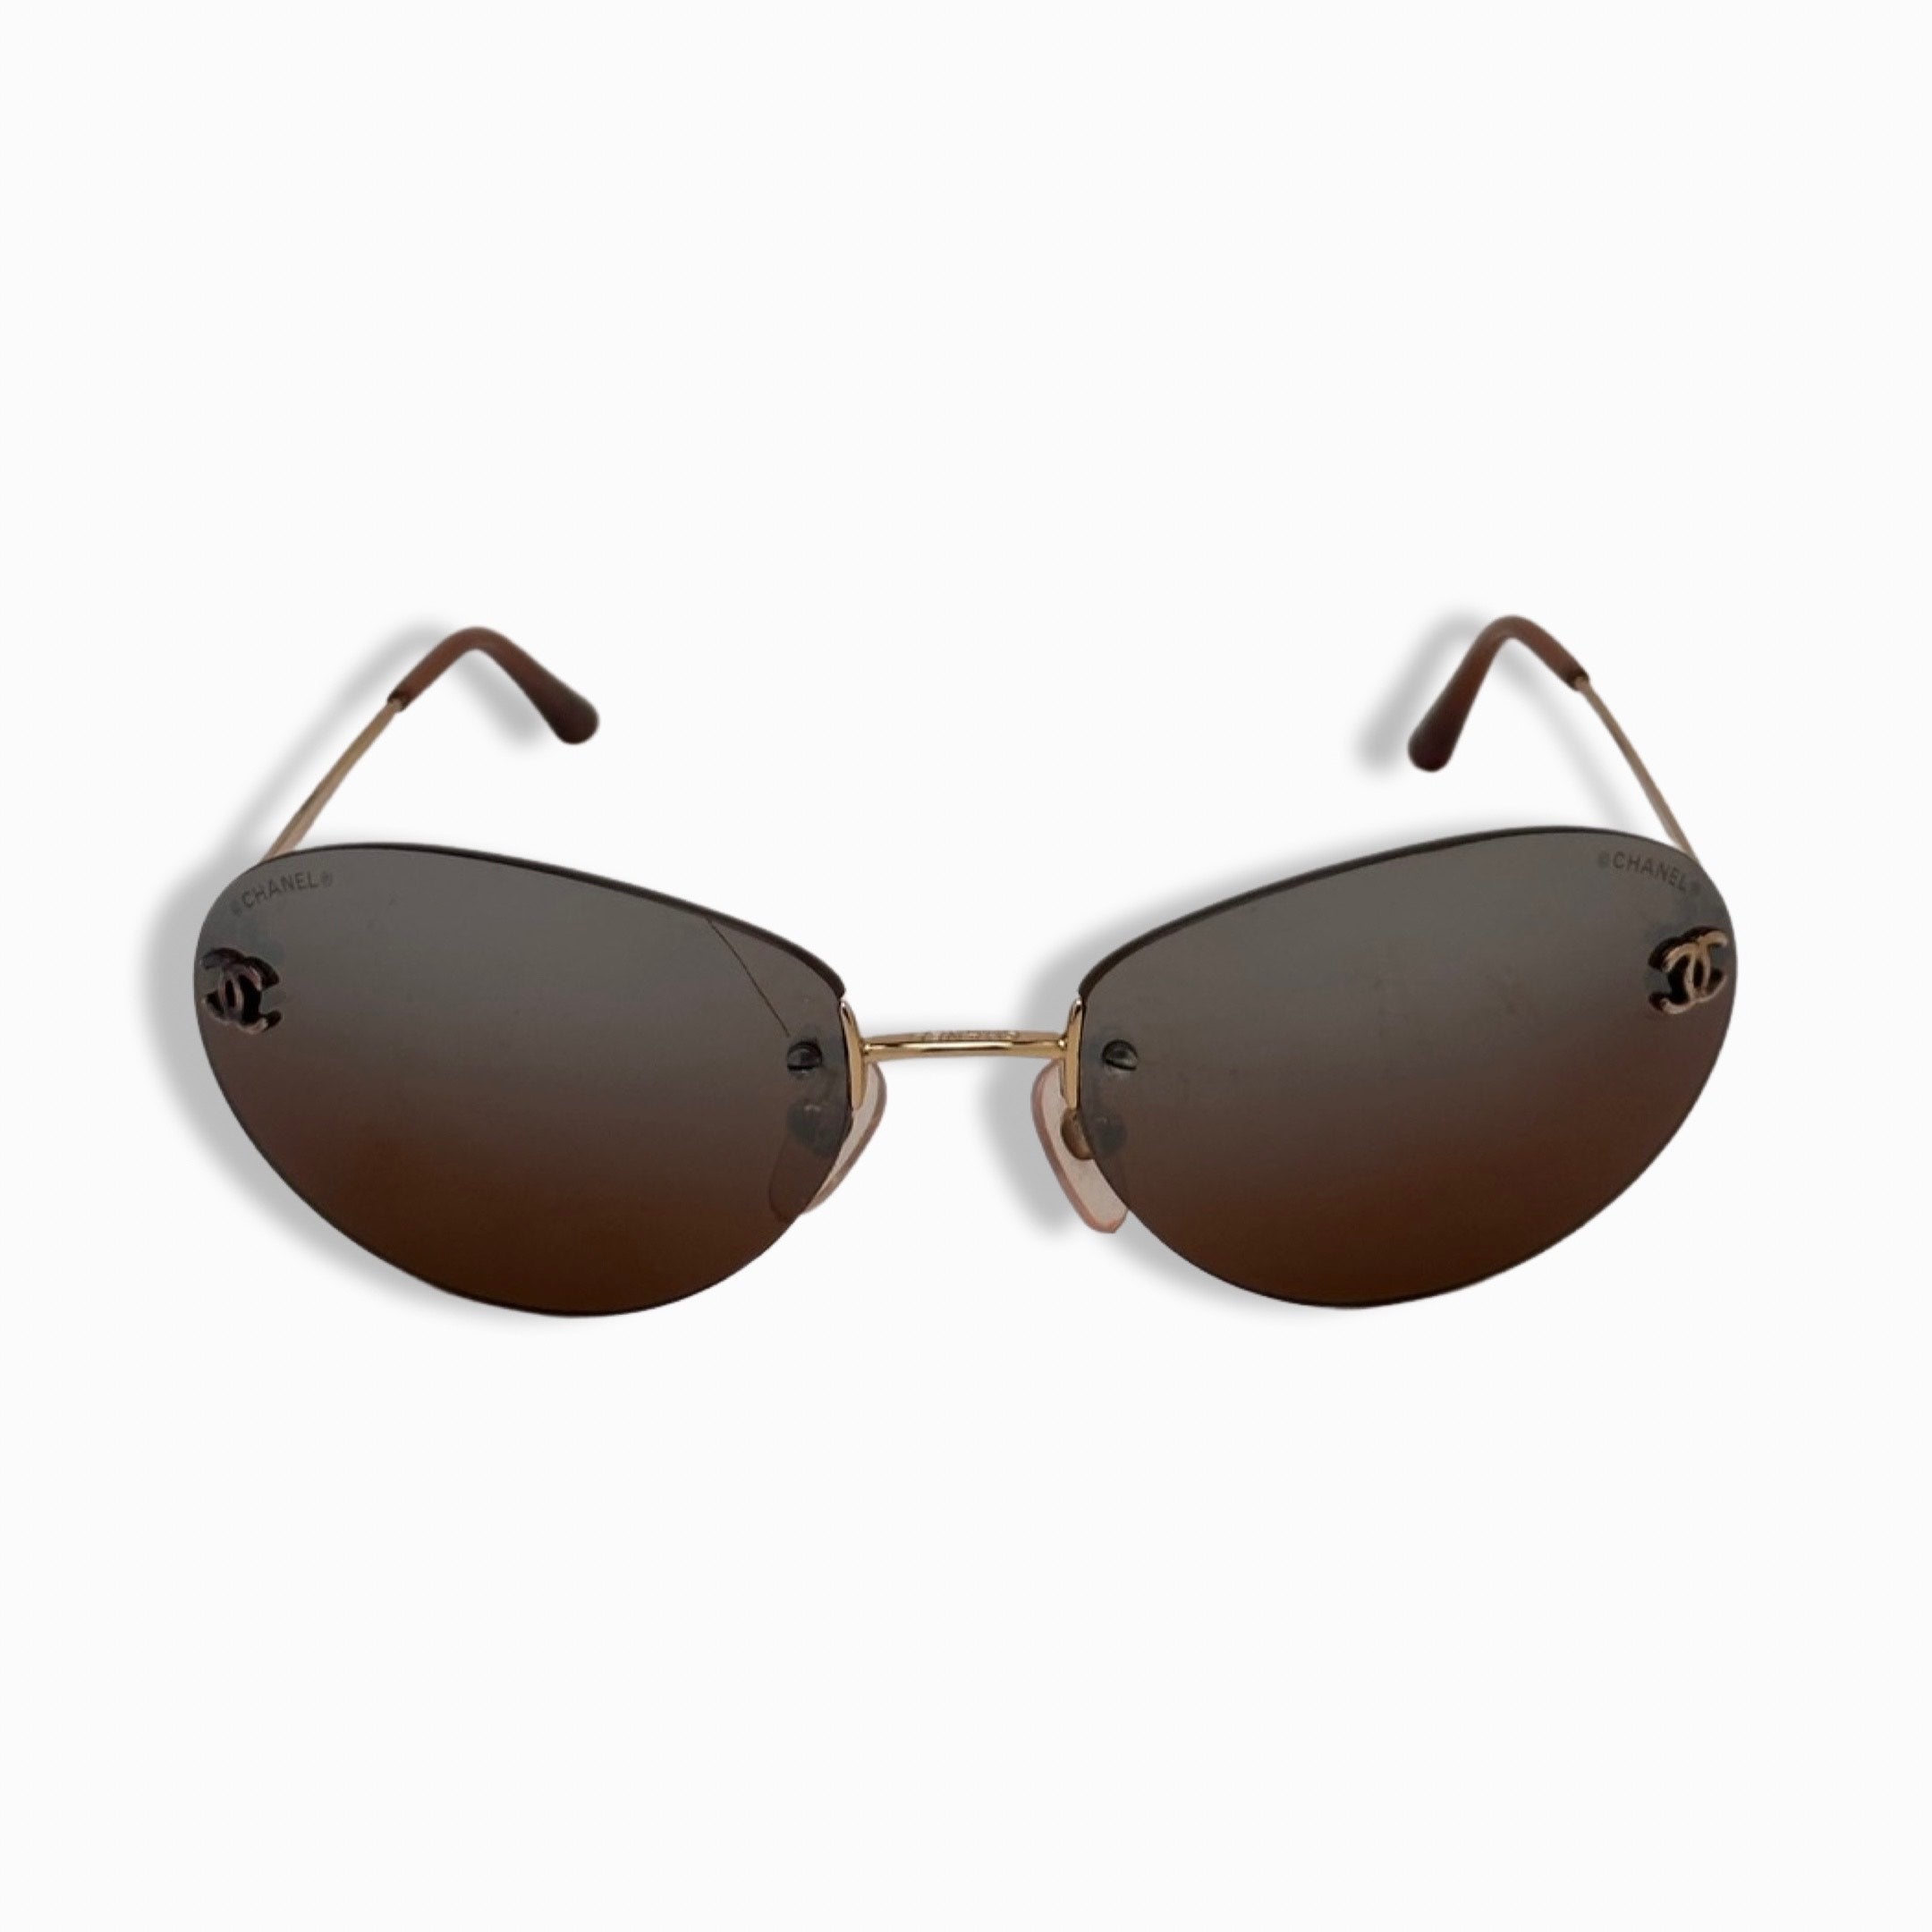 CHANEL Aviator sunglasses